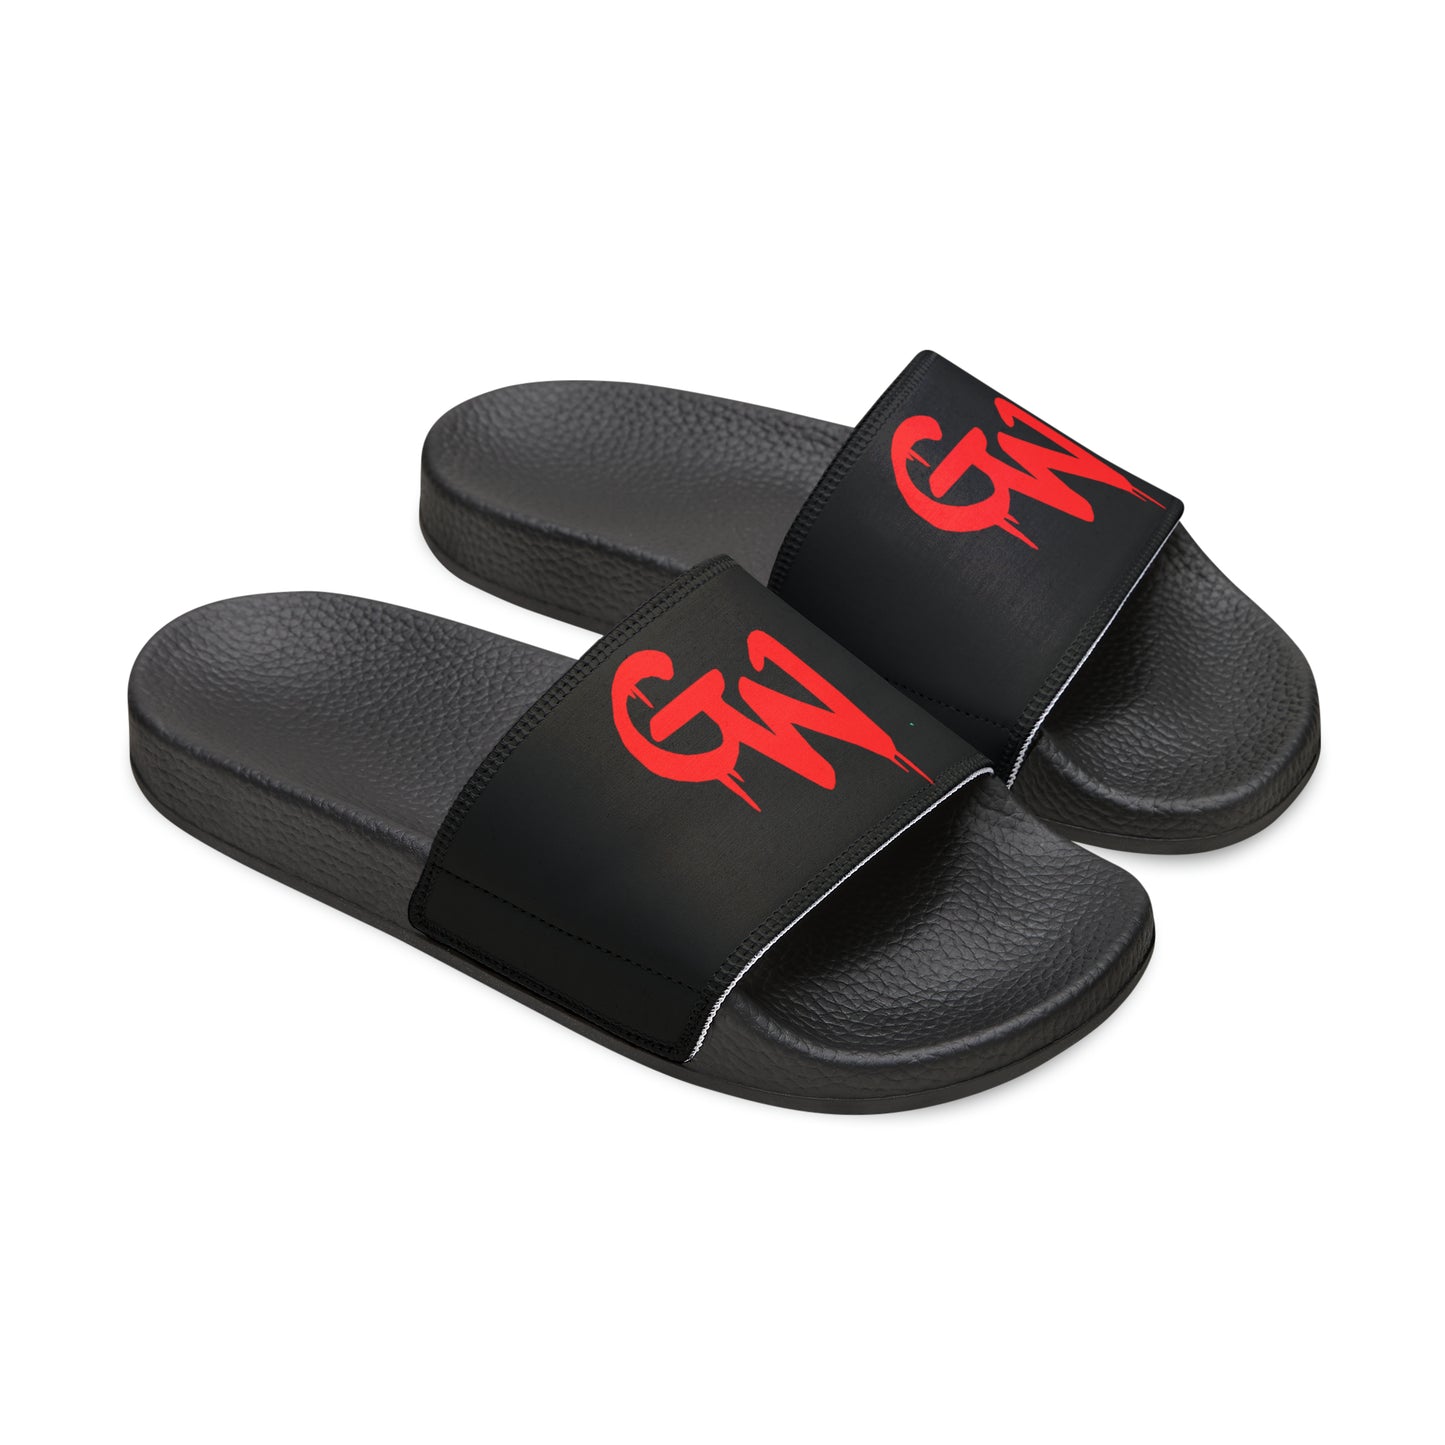 GWA Men's PU Slide Sandals